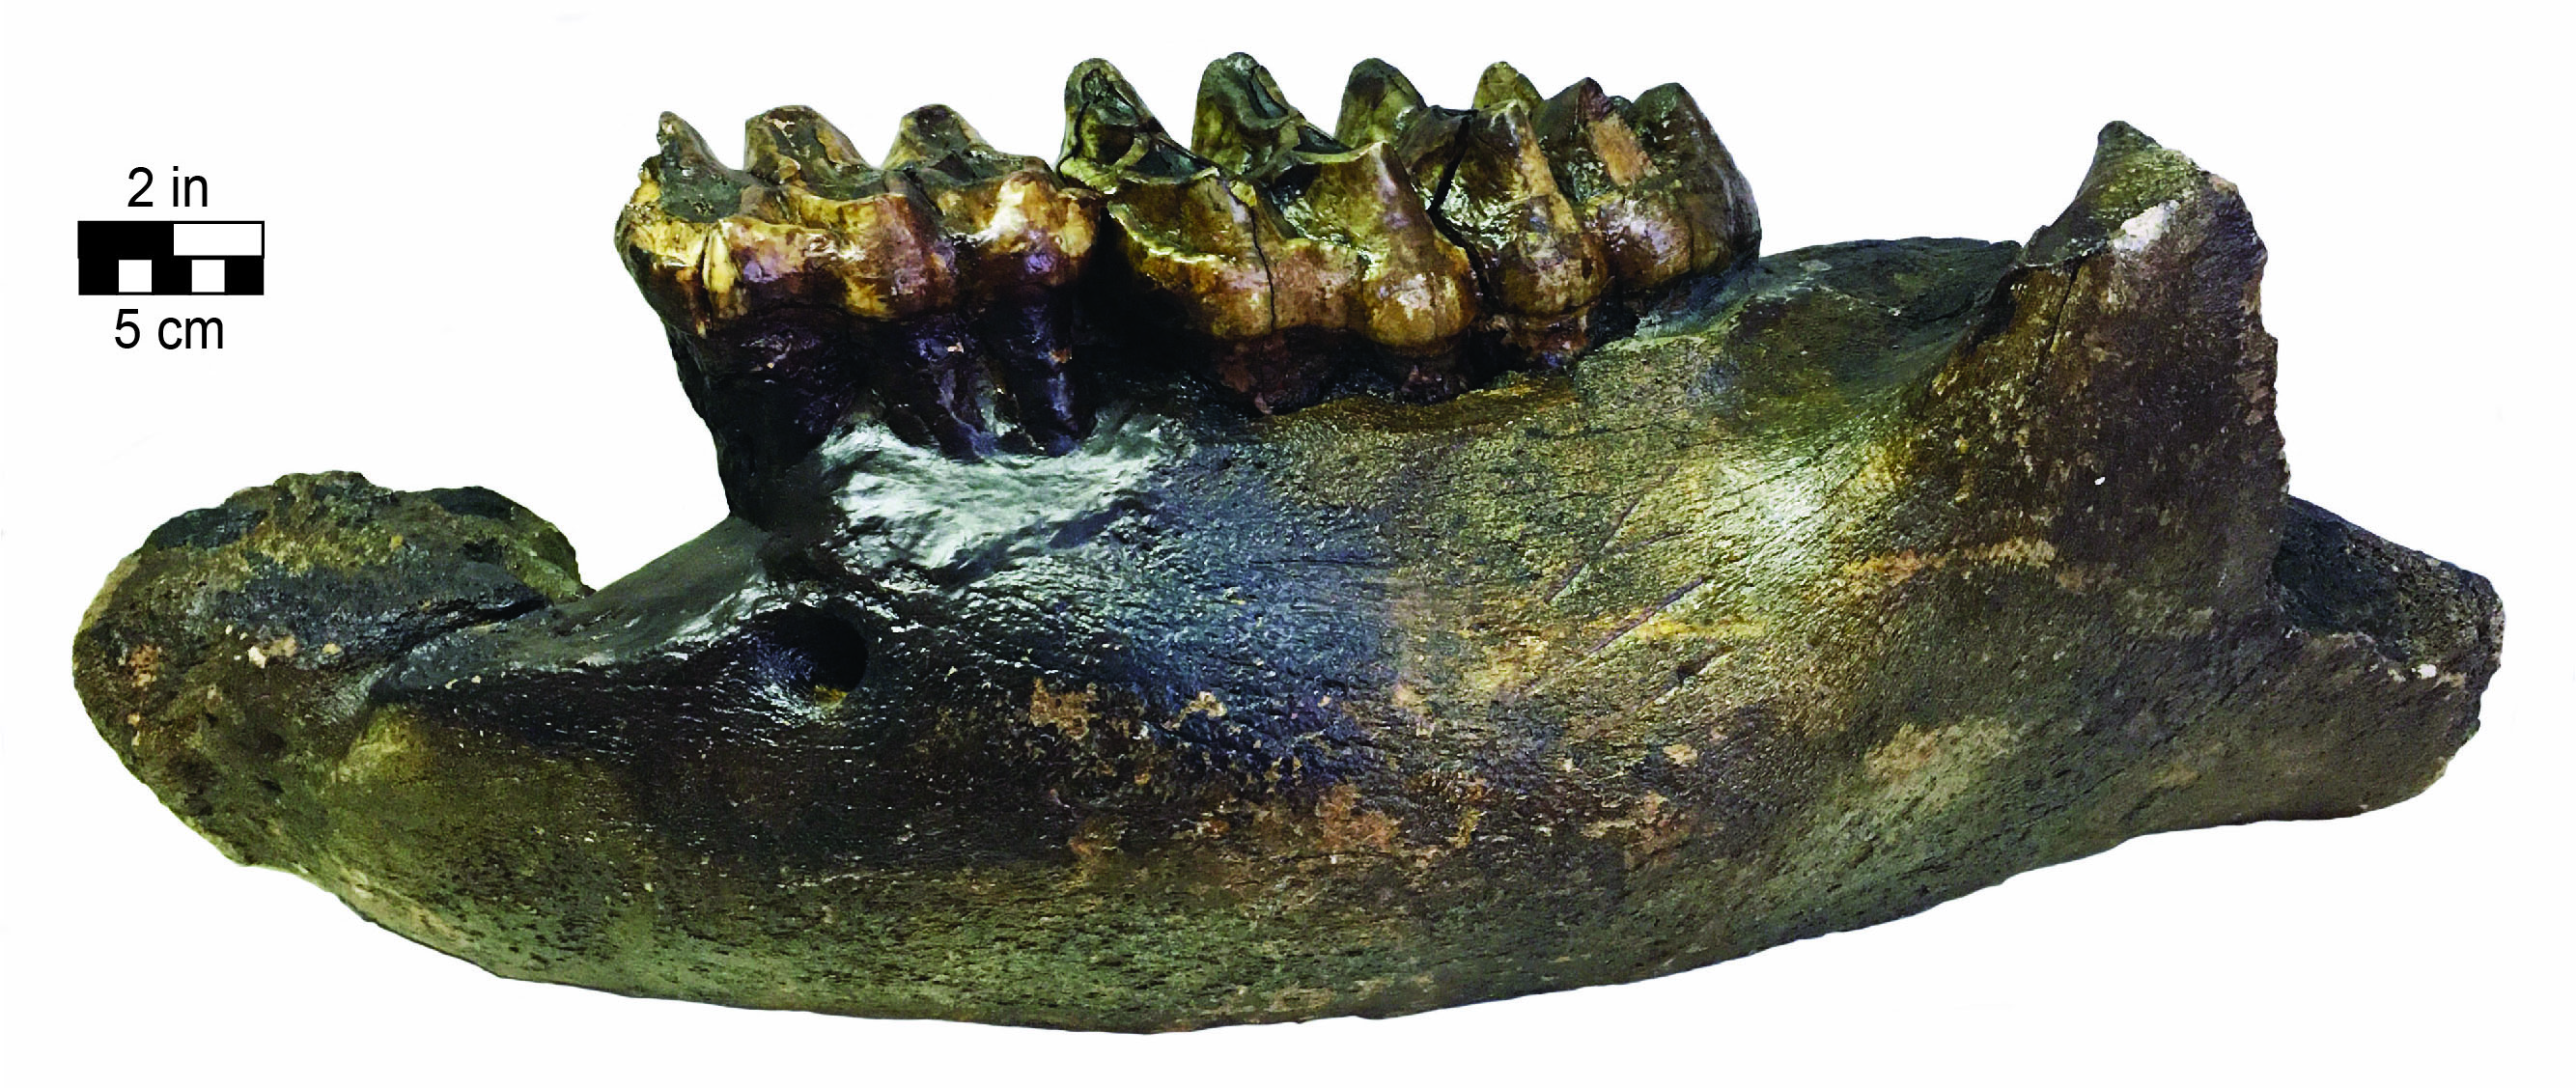 fossil mastodon teeth and jaw fragment